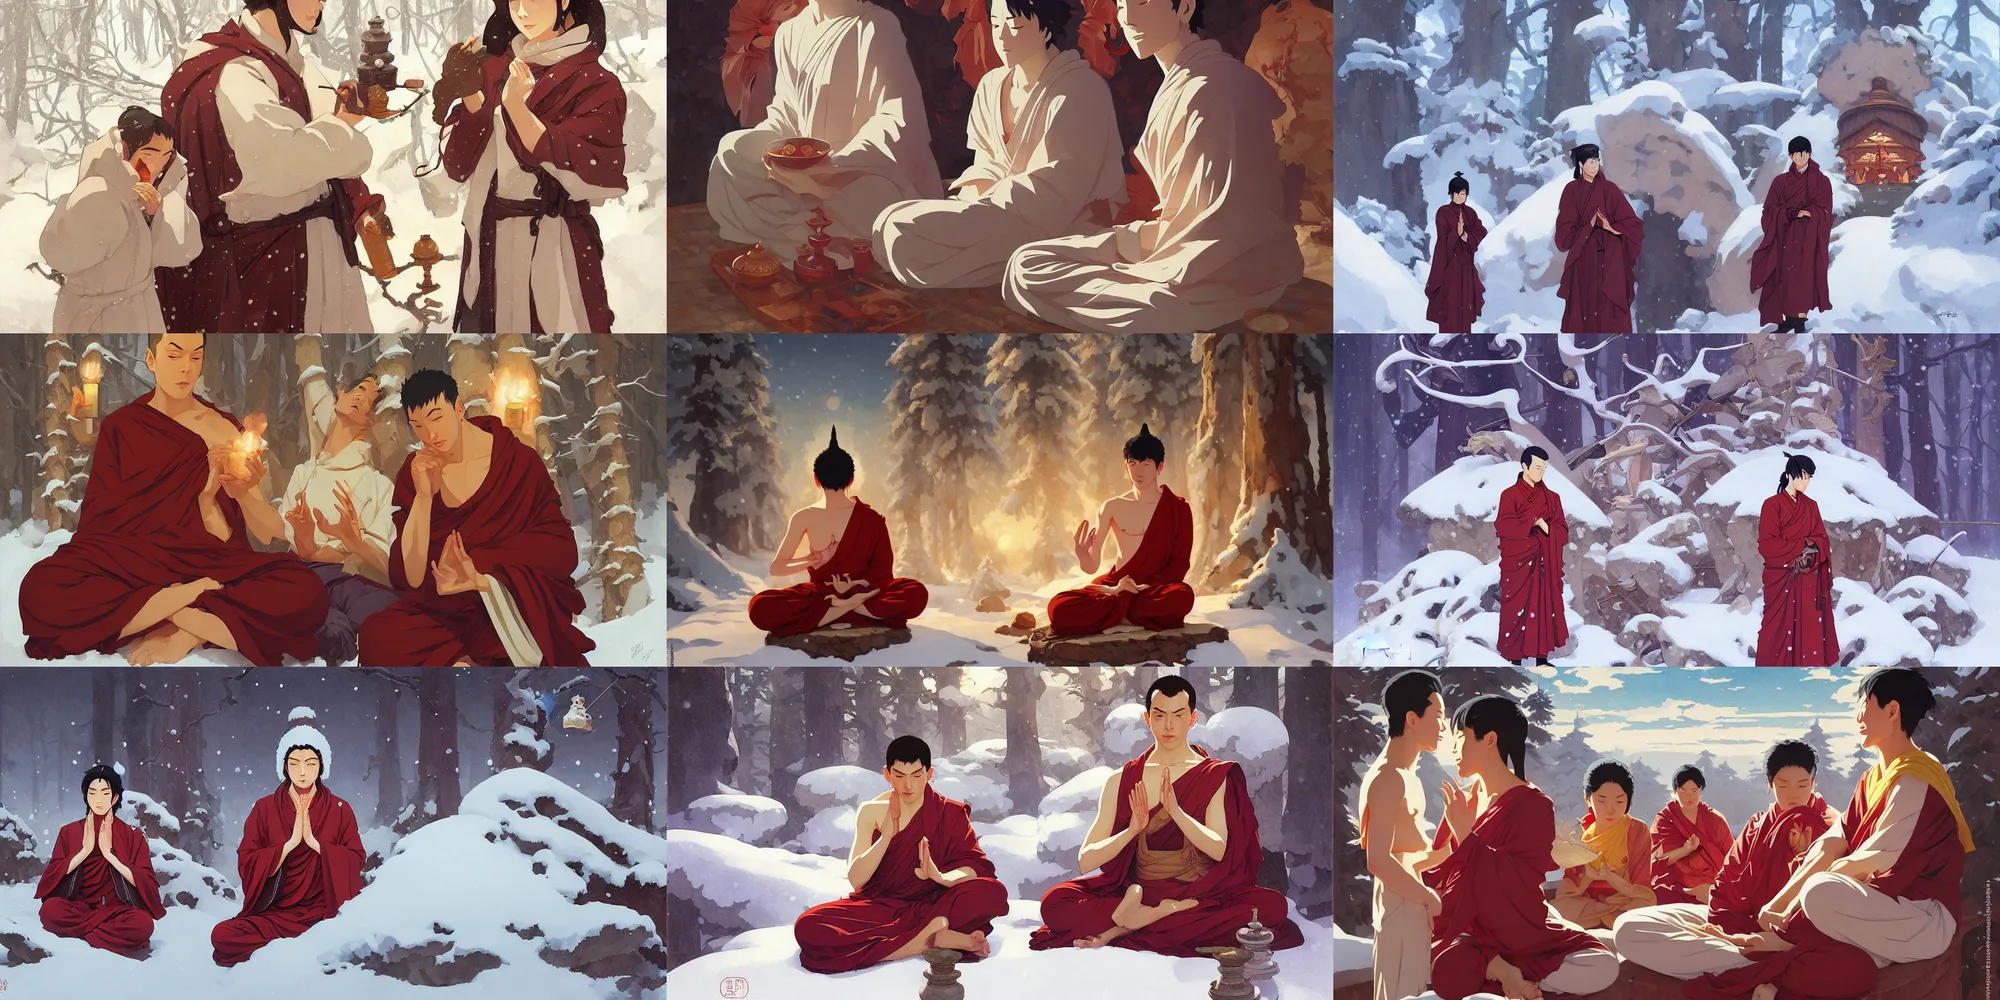 Prompt: buddhism, winter, in the style of studio ghibli, j. c. leyendecker, greg rutkowski, artem